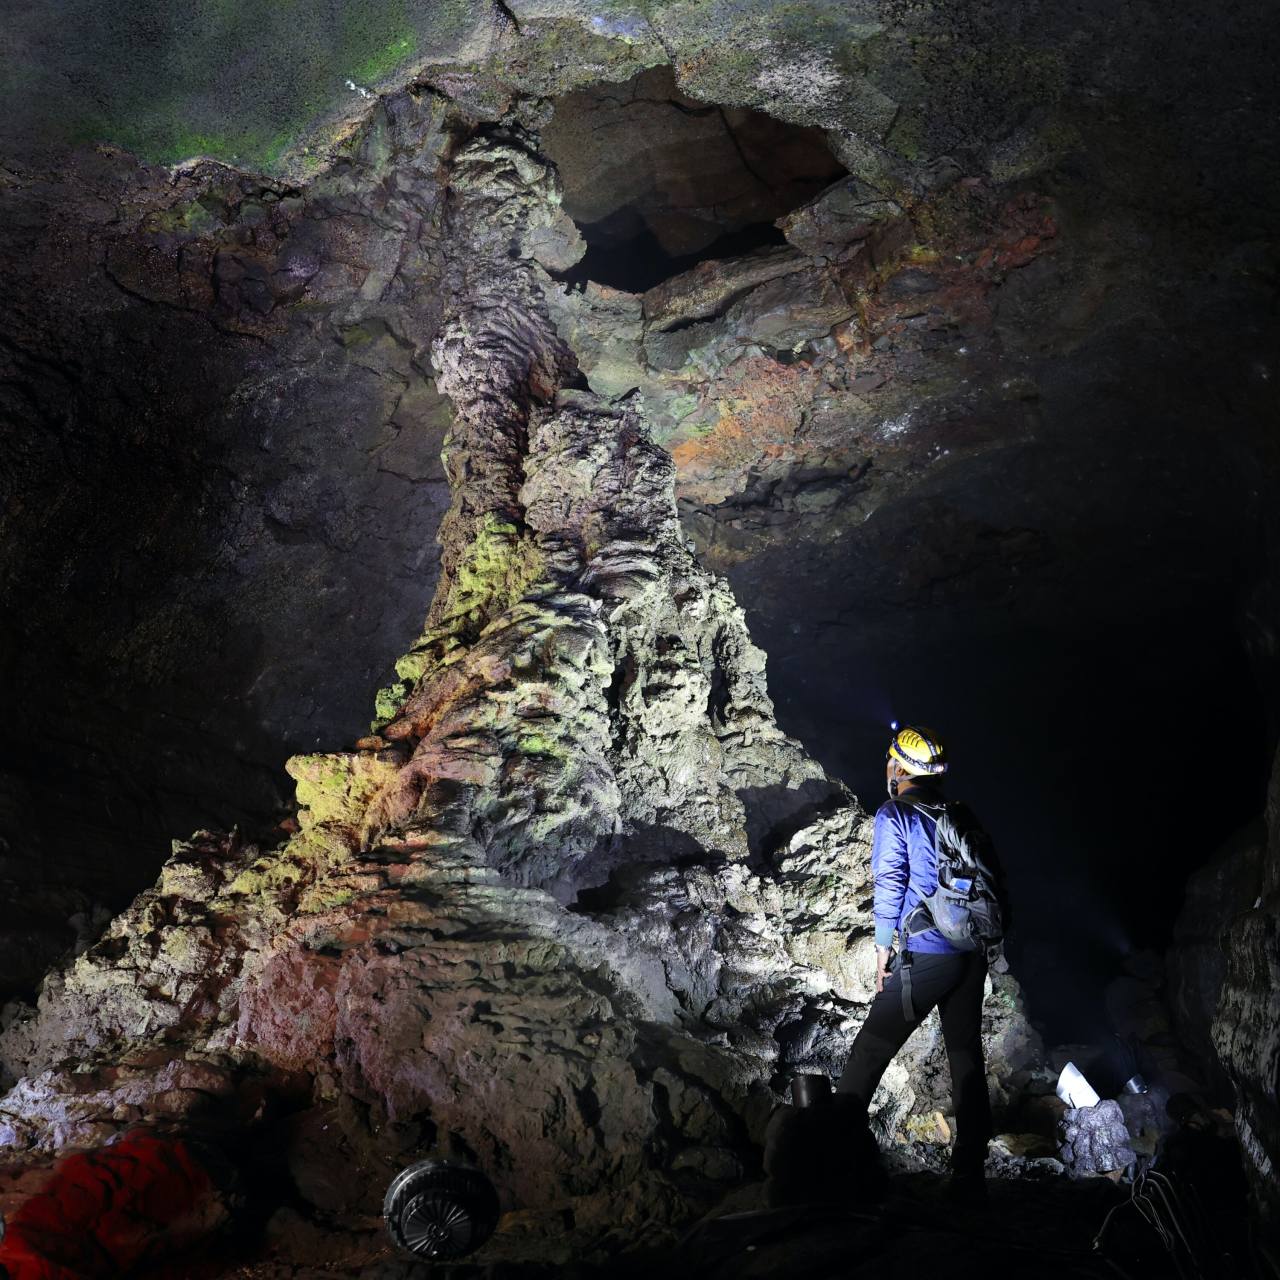 Volcanologist Ahn Ung-san examines a 7.6-meter-tall lava column inside the Manjanggul cave. Photo @ Hyungwon Kang